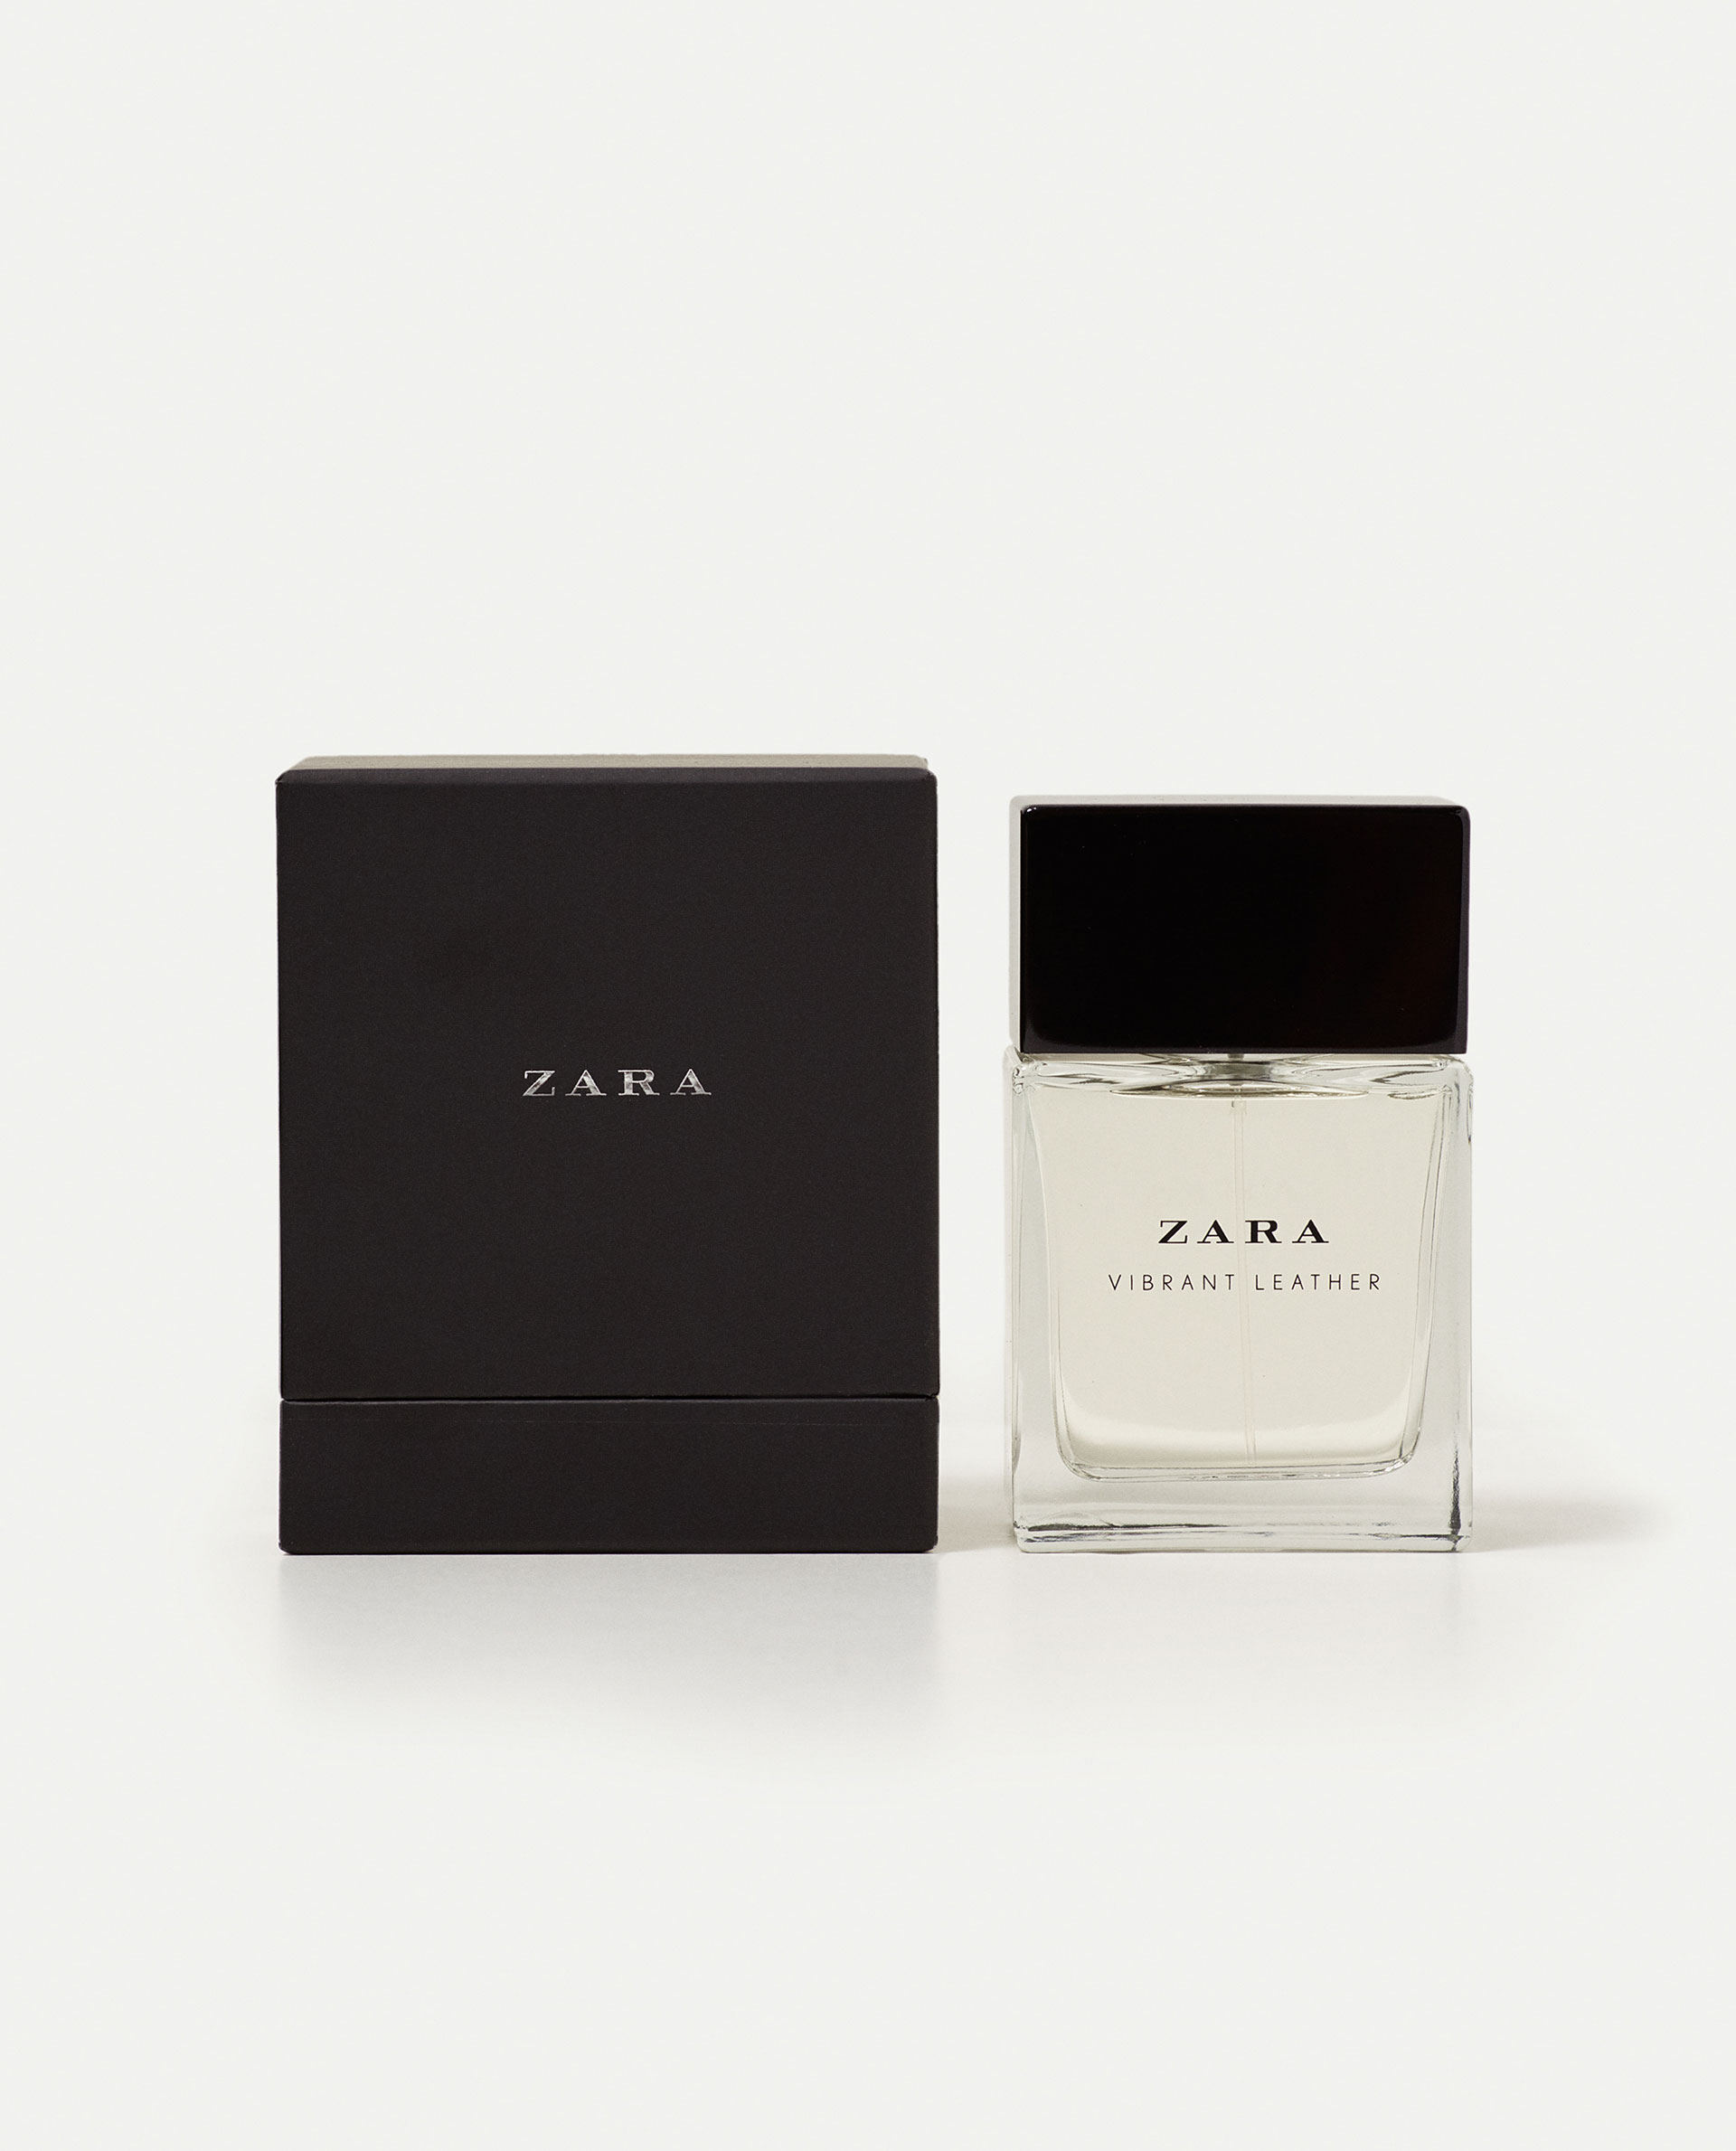 Vibrant Leather Zara cologne - a new fragrance for men 2016